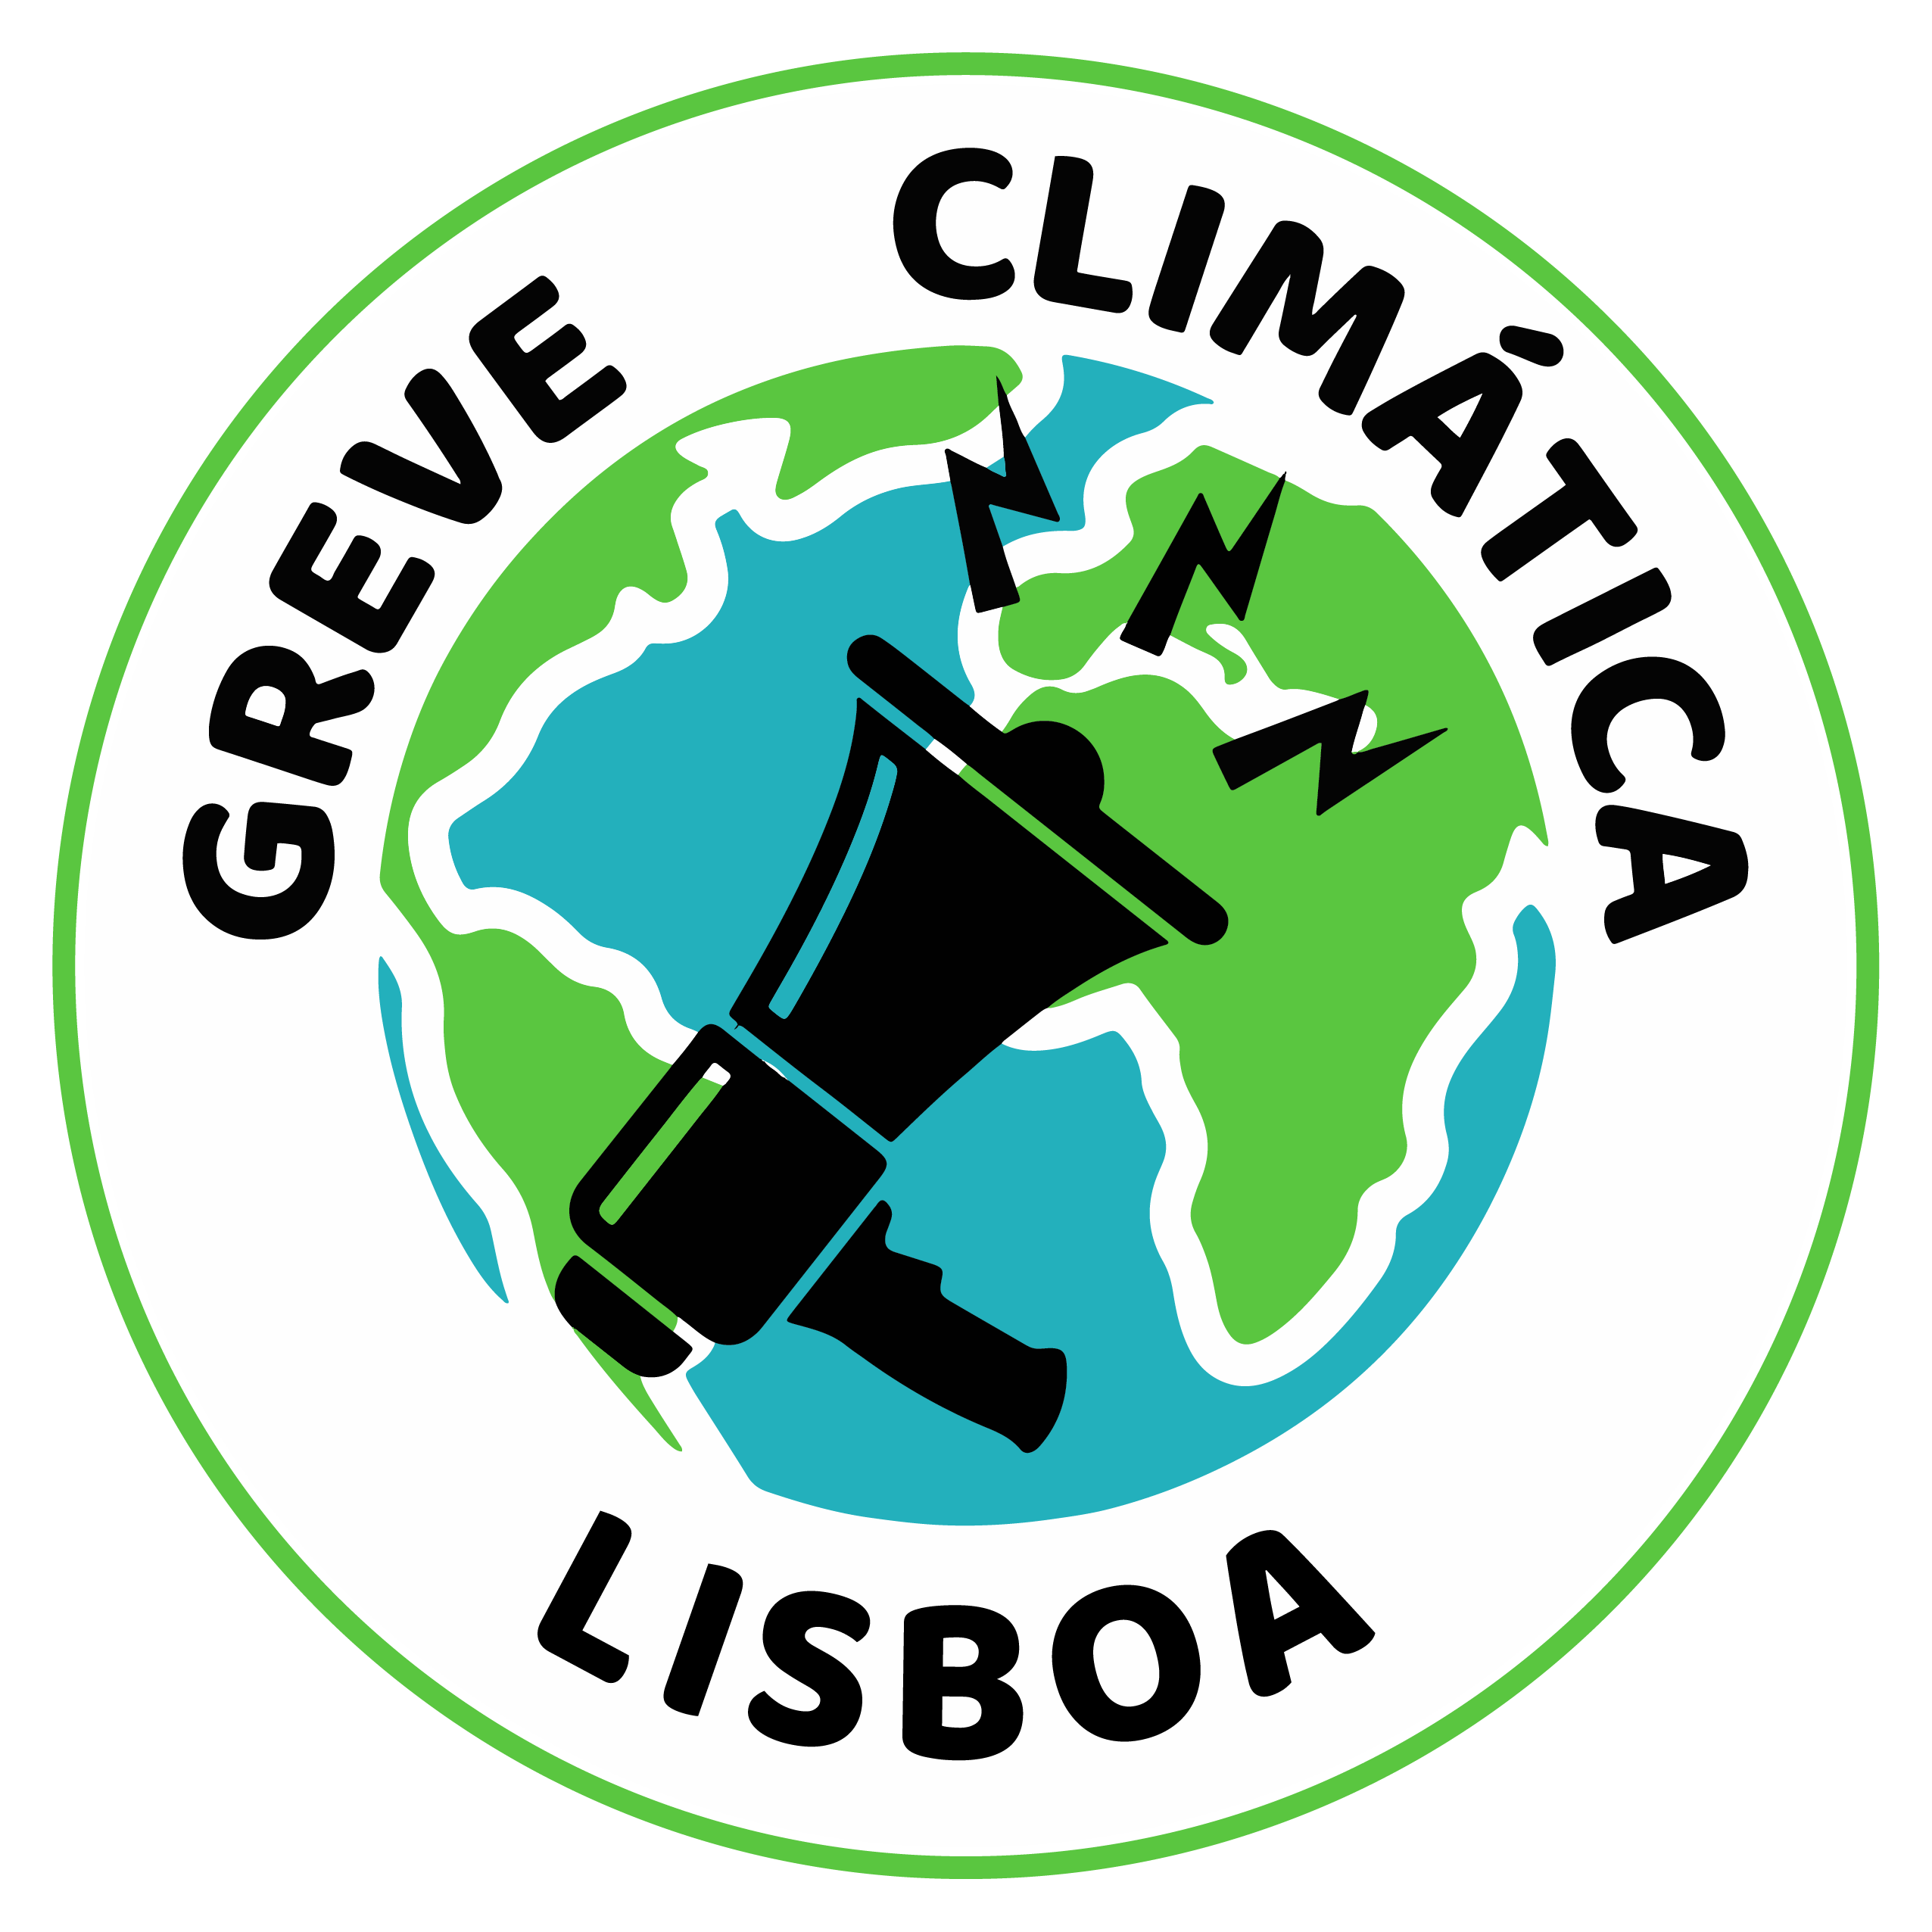 Greve Climática Lisboa